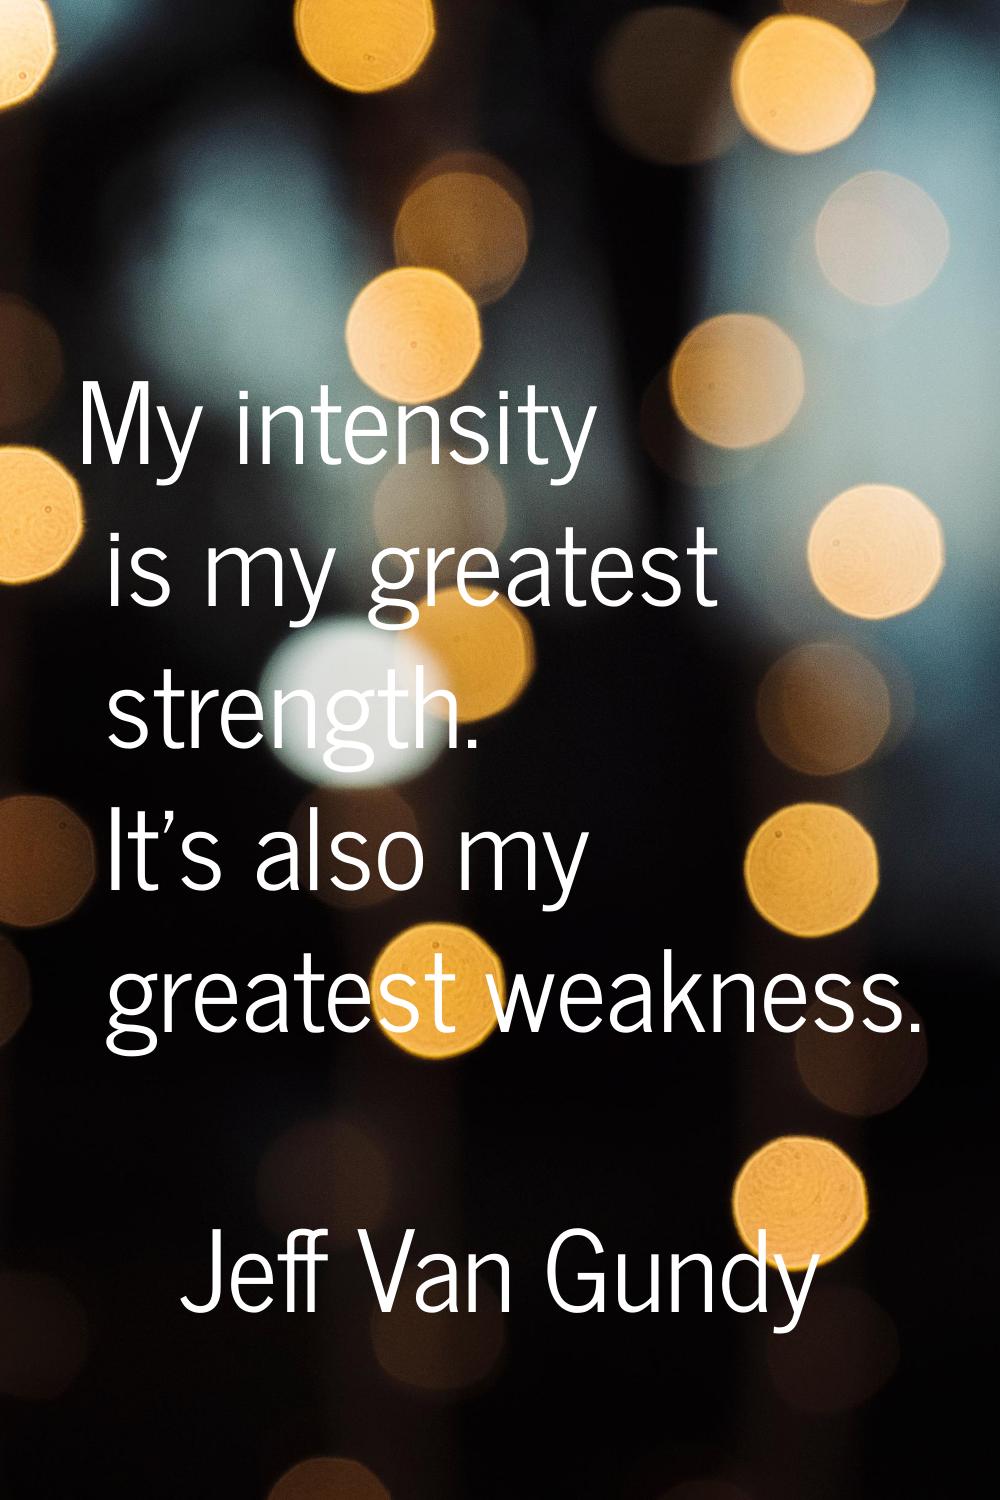 My intensity is my greatest strength. It's also my greatest weakness.